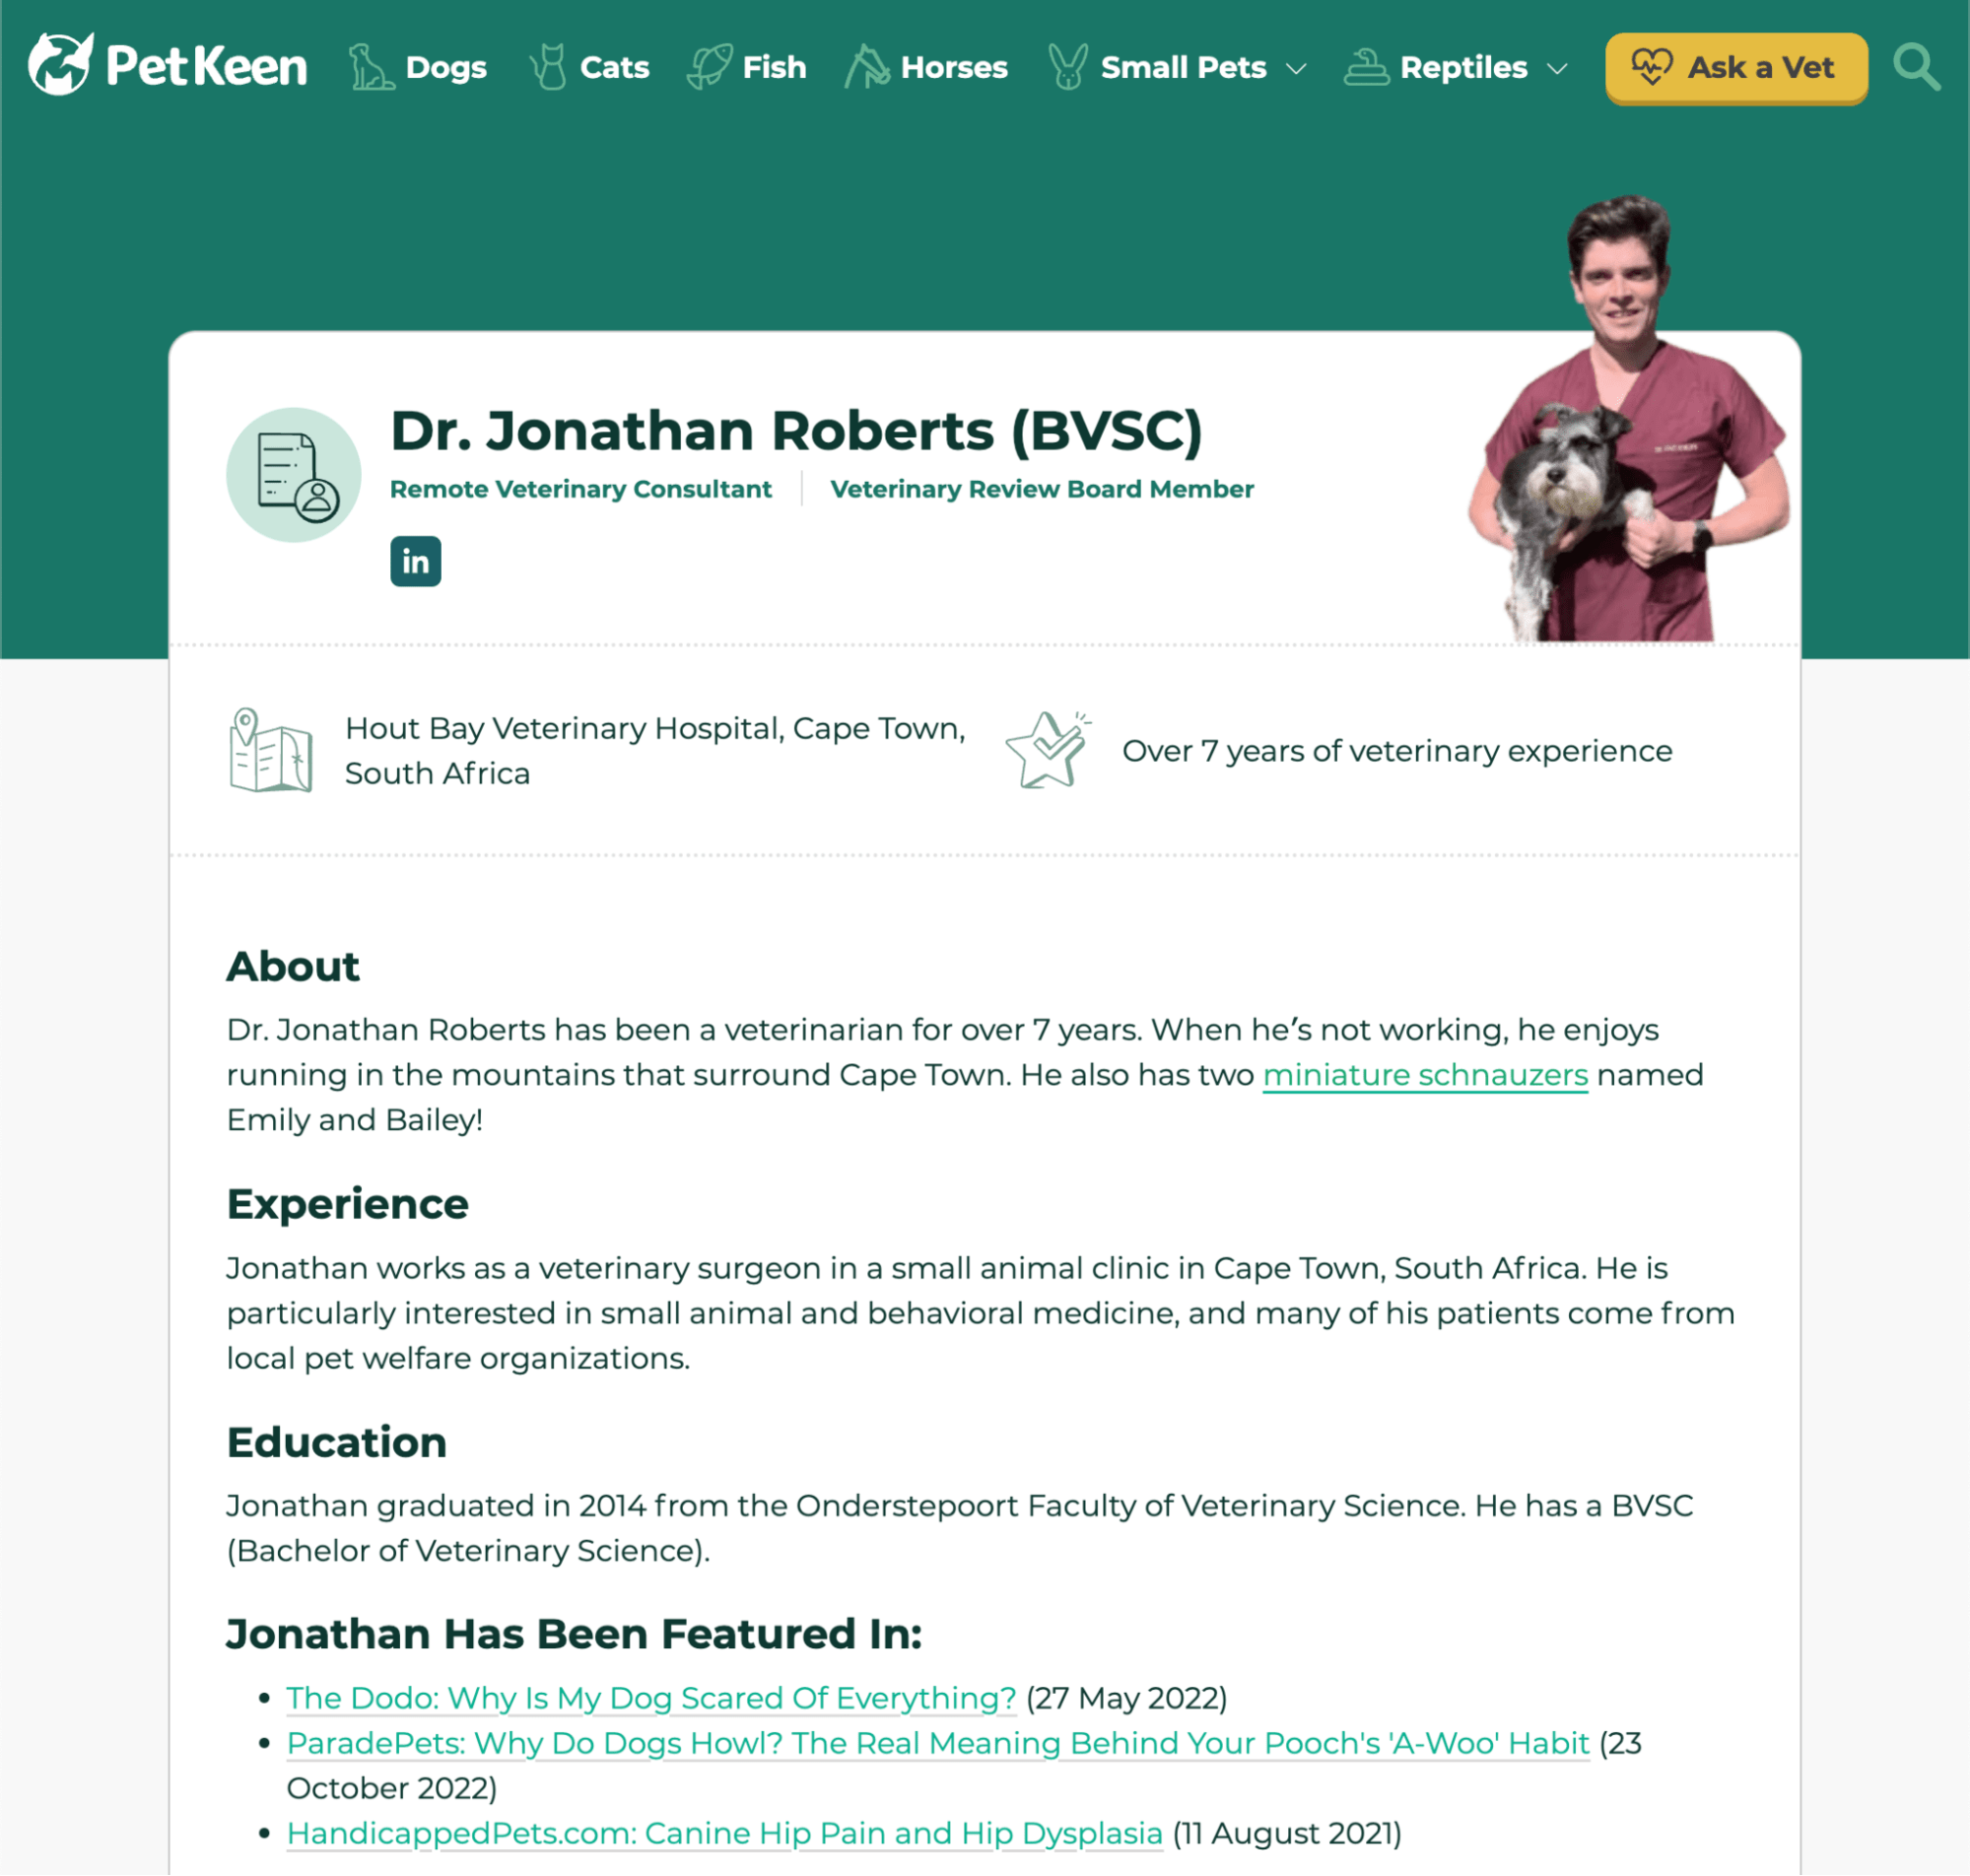 petkeen.com上的一个作者页面，展示了兽医乔纳森·罗伯茨博士（Dr. Jonathan Roberts）的专业知识